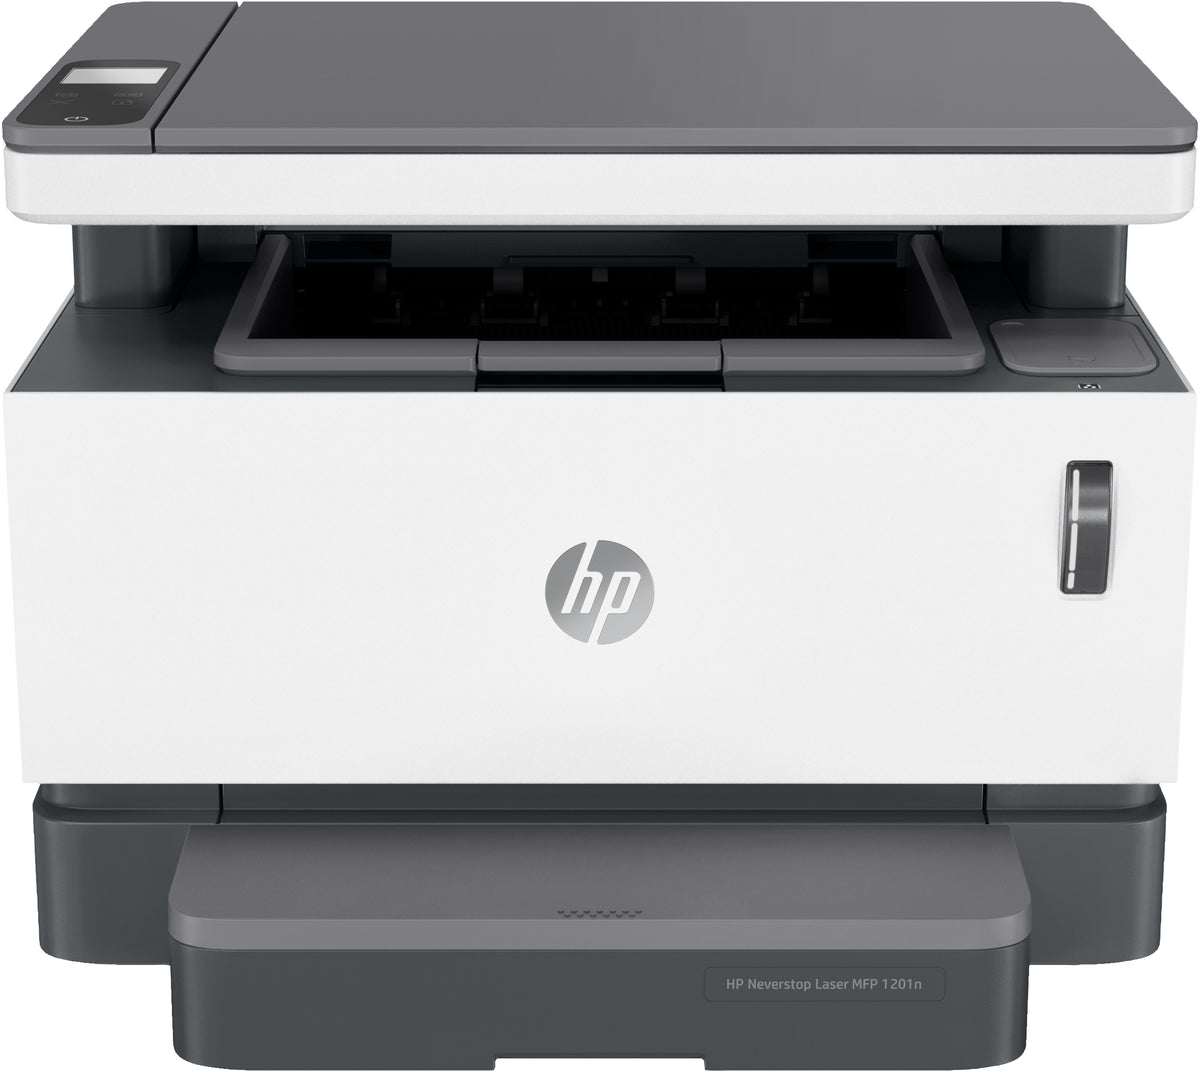 HP Neverstop Laser MFP 1201n - Multifunction Printer - B/W - laser - 216 x 356 mm (original) - Legal (media) - up to 14 ppm (copy) - up to 20 ppm (print) - 150 sheets - USB 2.0, LAN